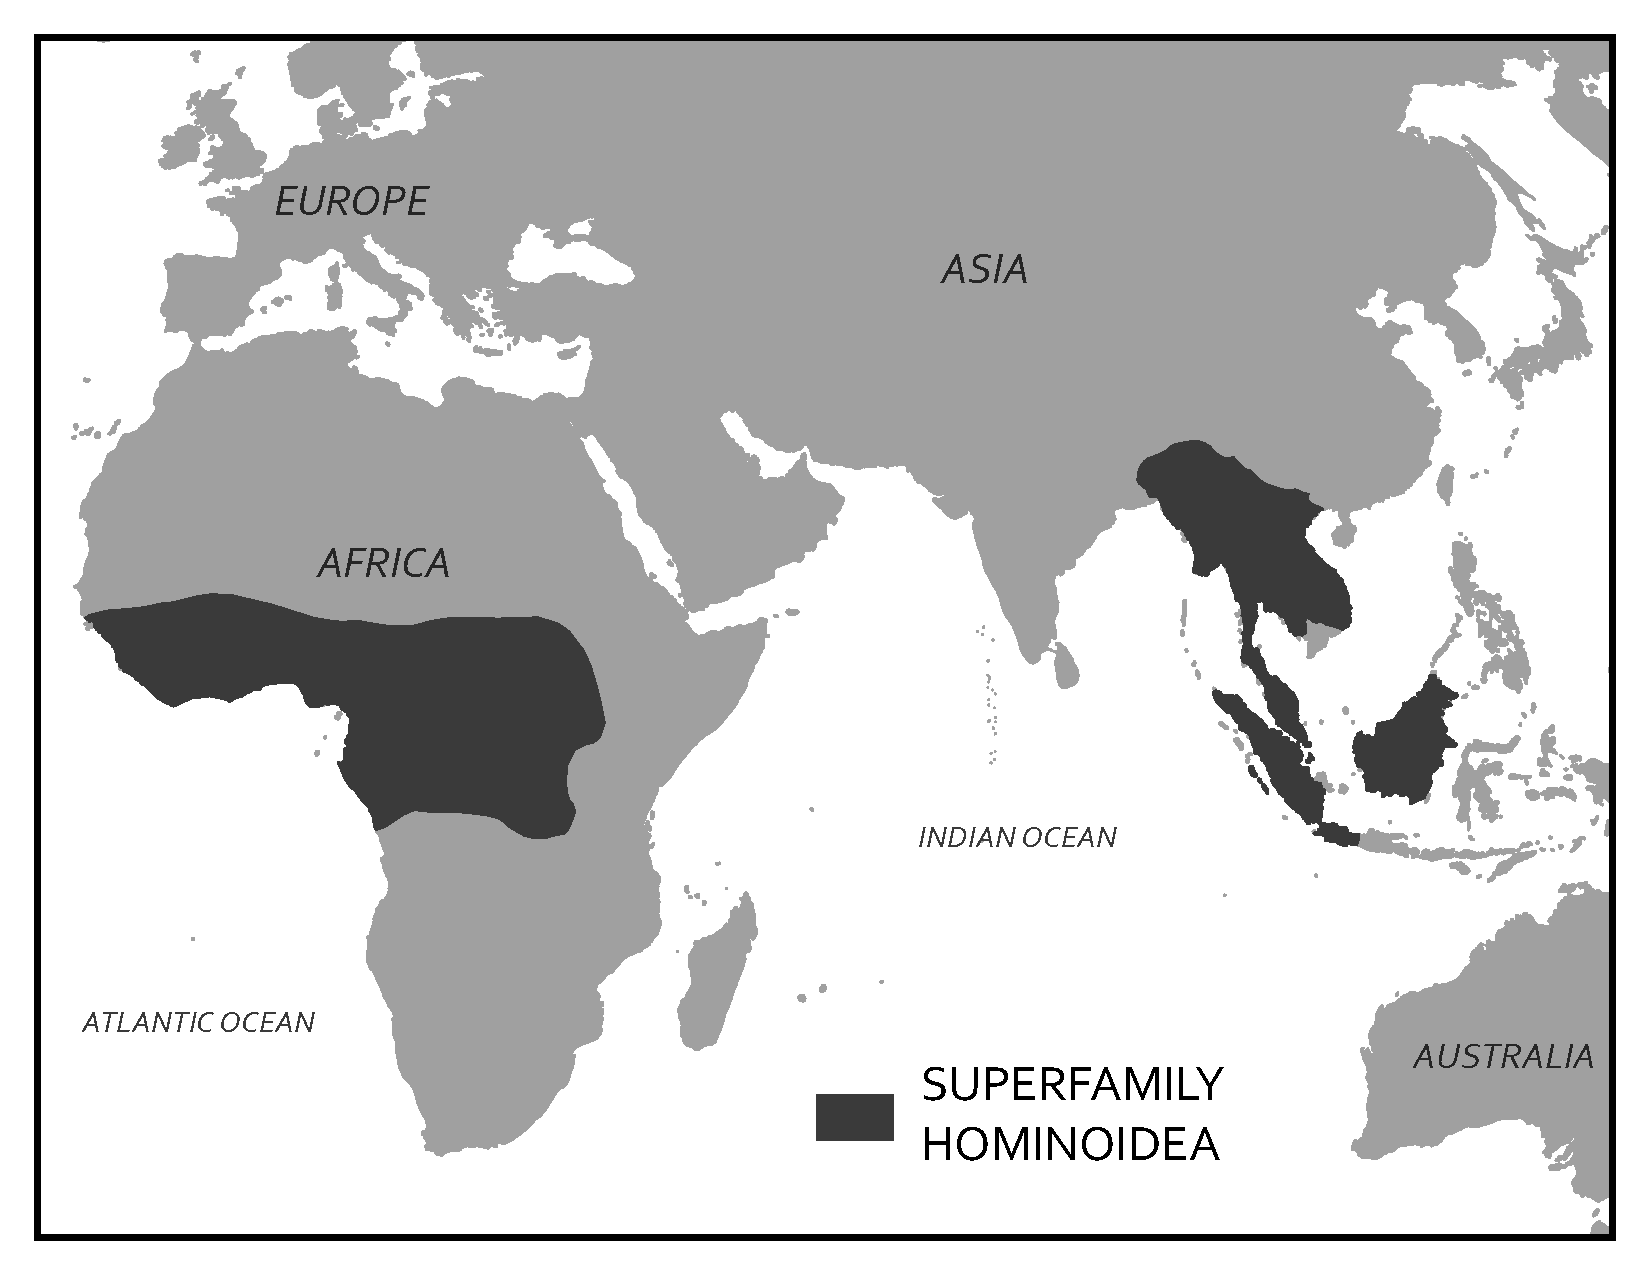 Areas of Europe, Asia, Africa, and Australia where hominoidea live.